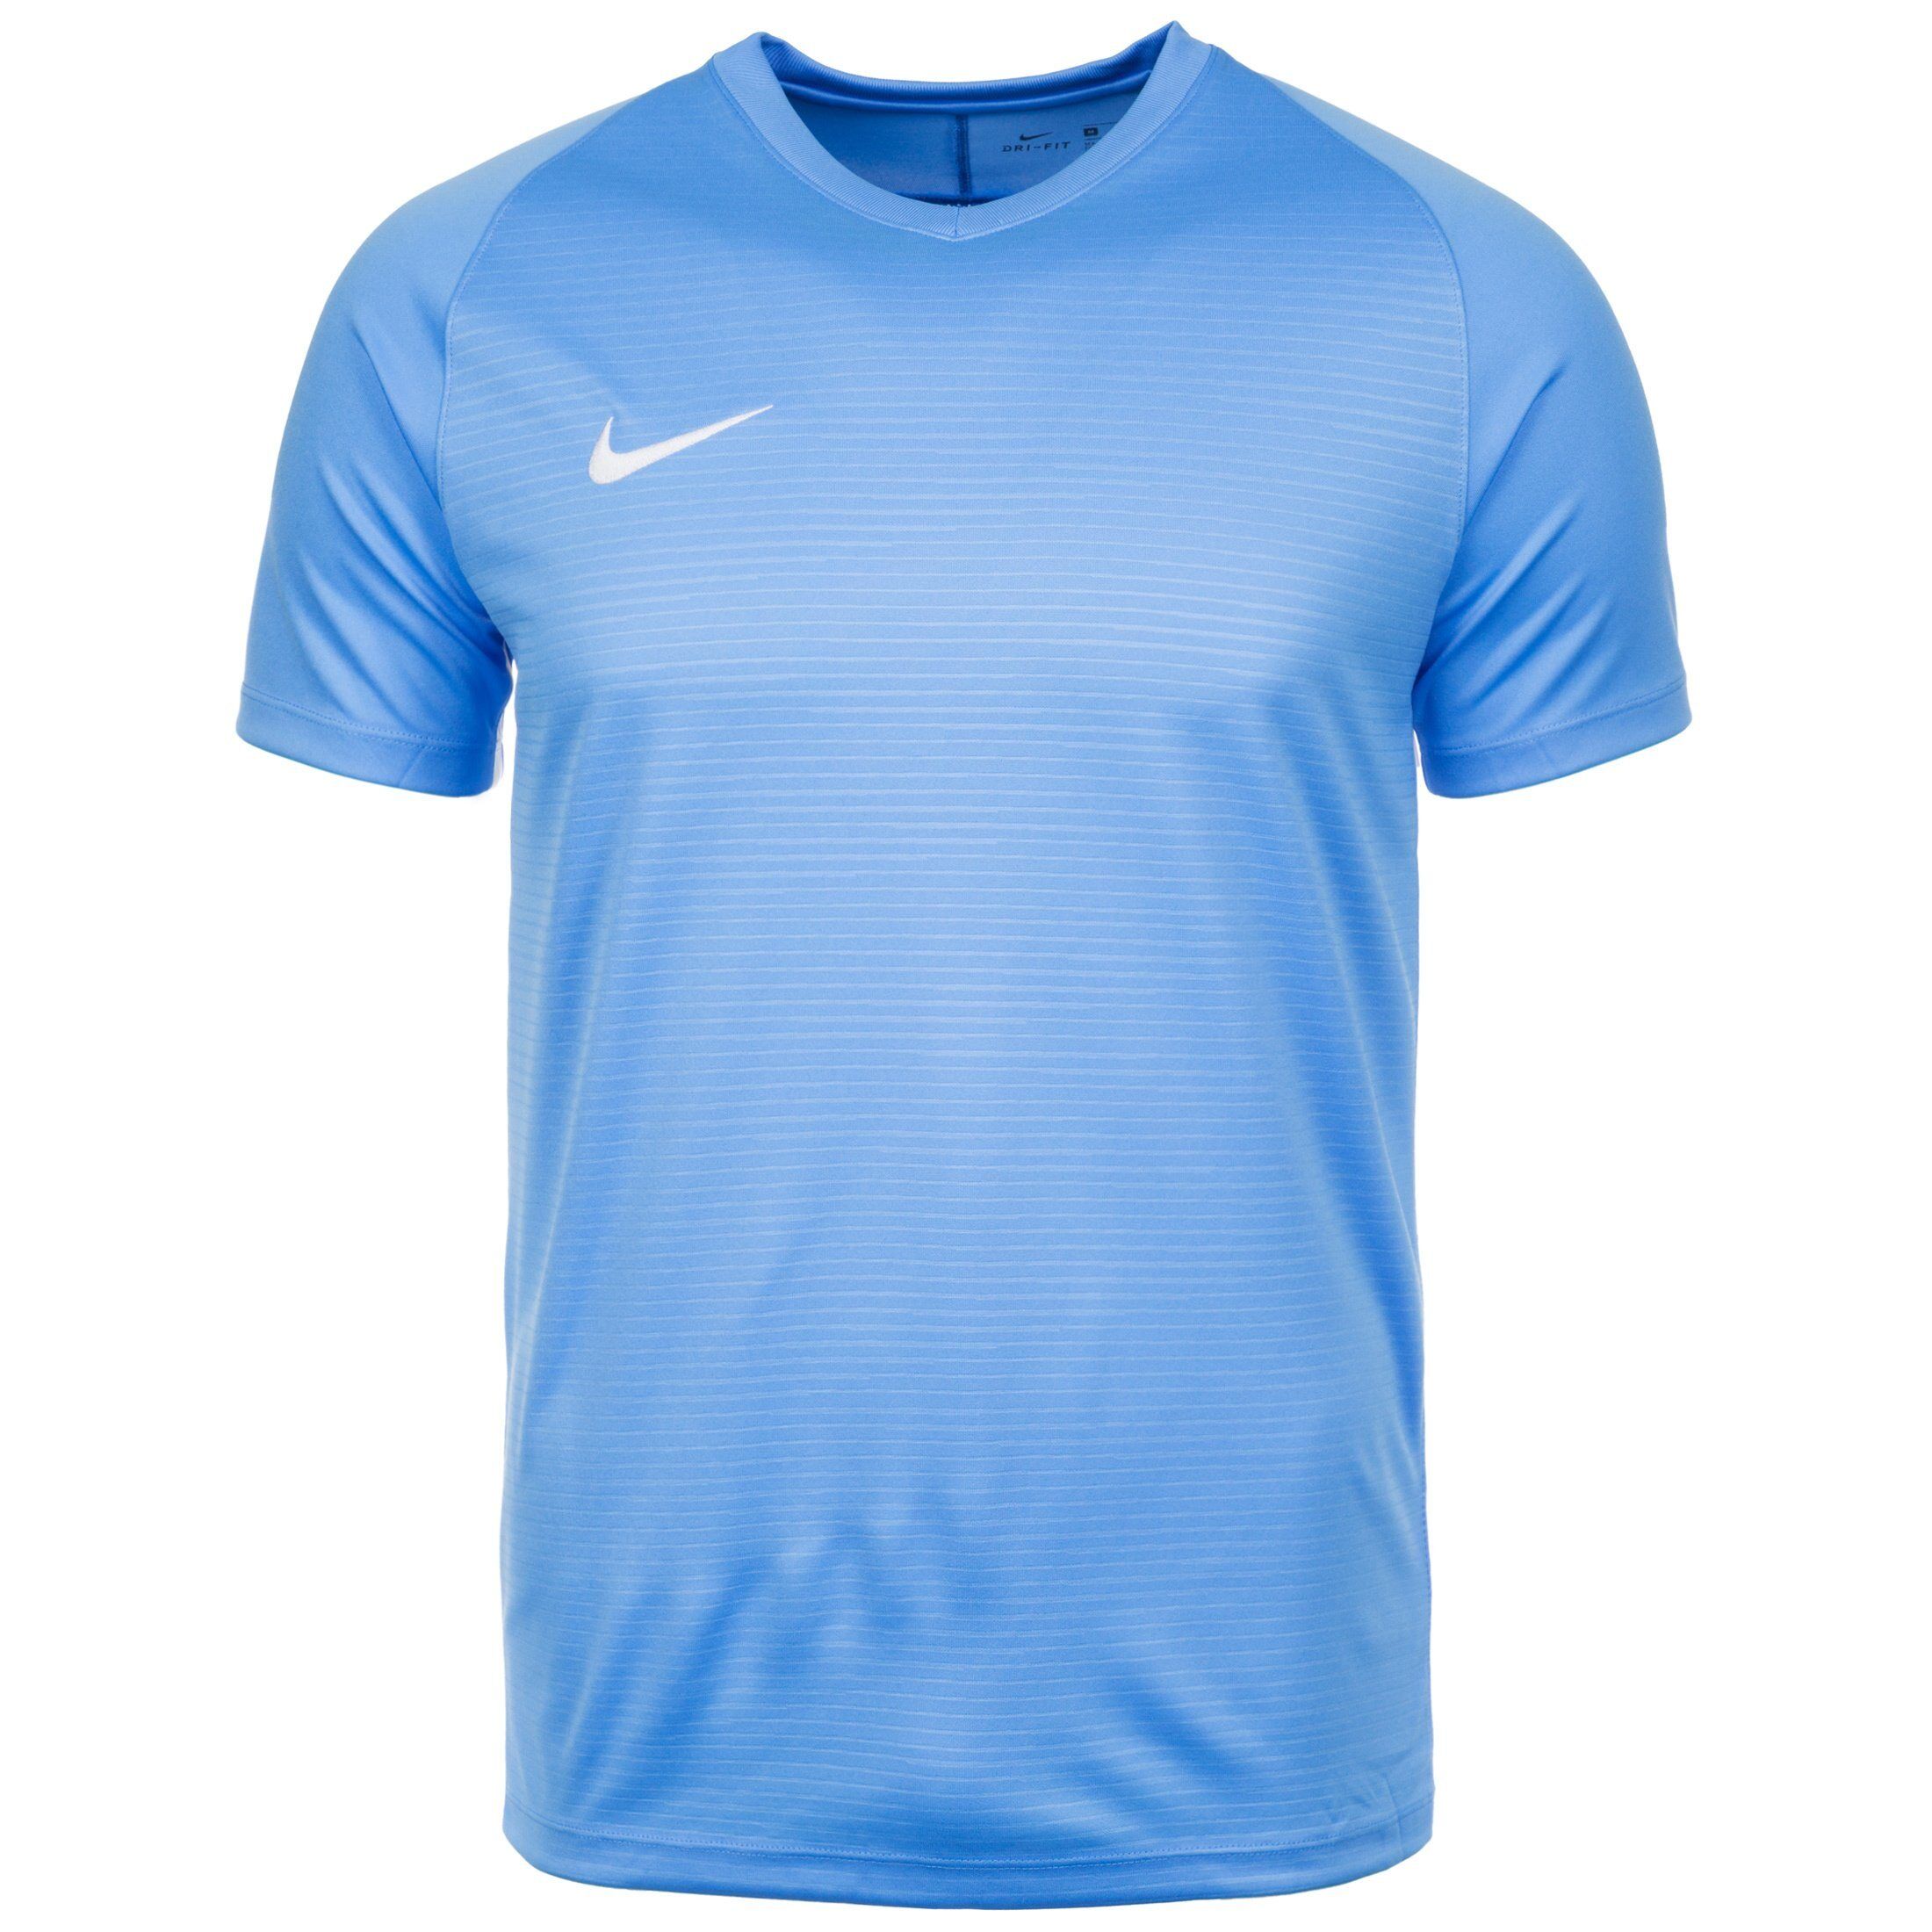 Nike Trikot »Dry Tiempo Premier«, hellblau-weiß